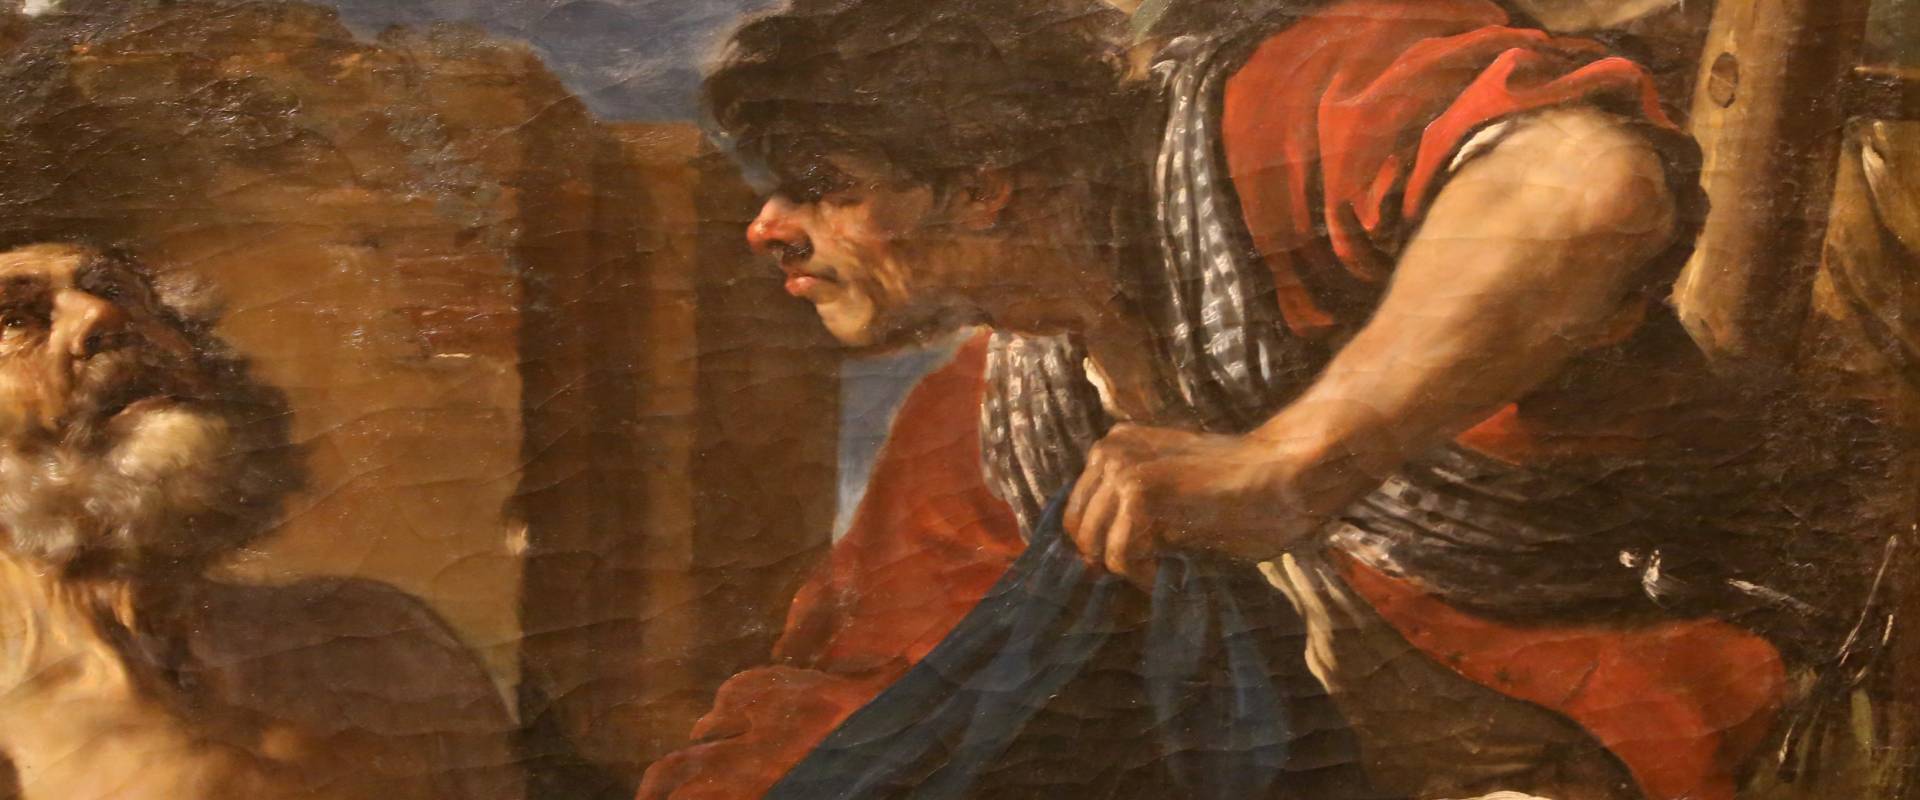 Guercino, martirio di san pietro, 1618, 02 foto di Sailko